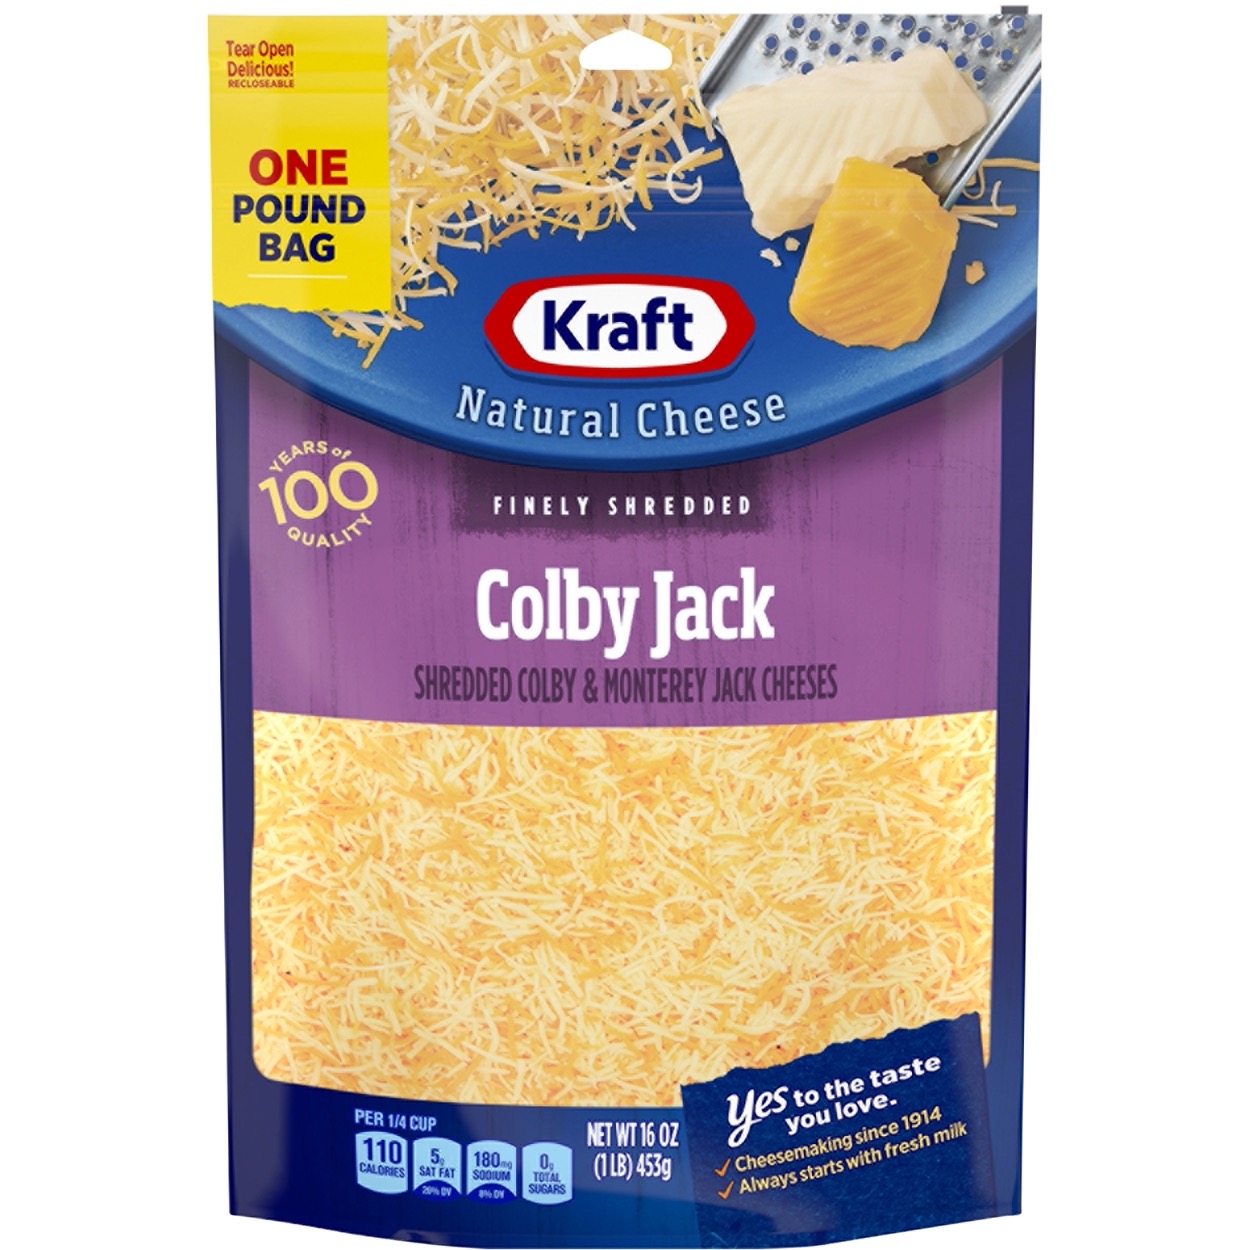 Colby Jack (Finely Shredded)